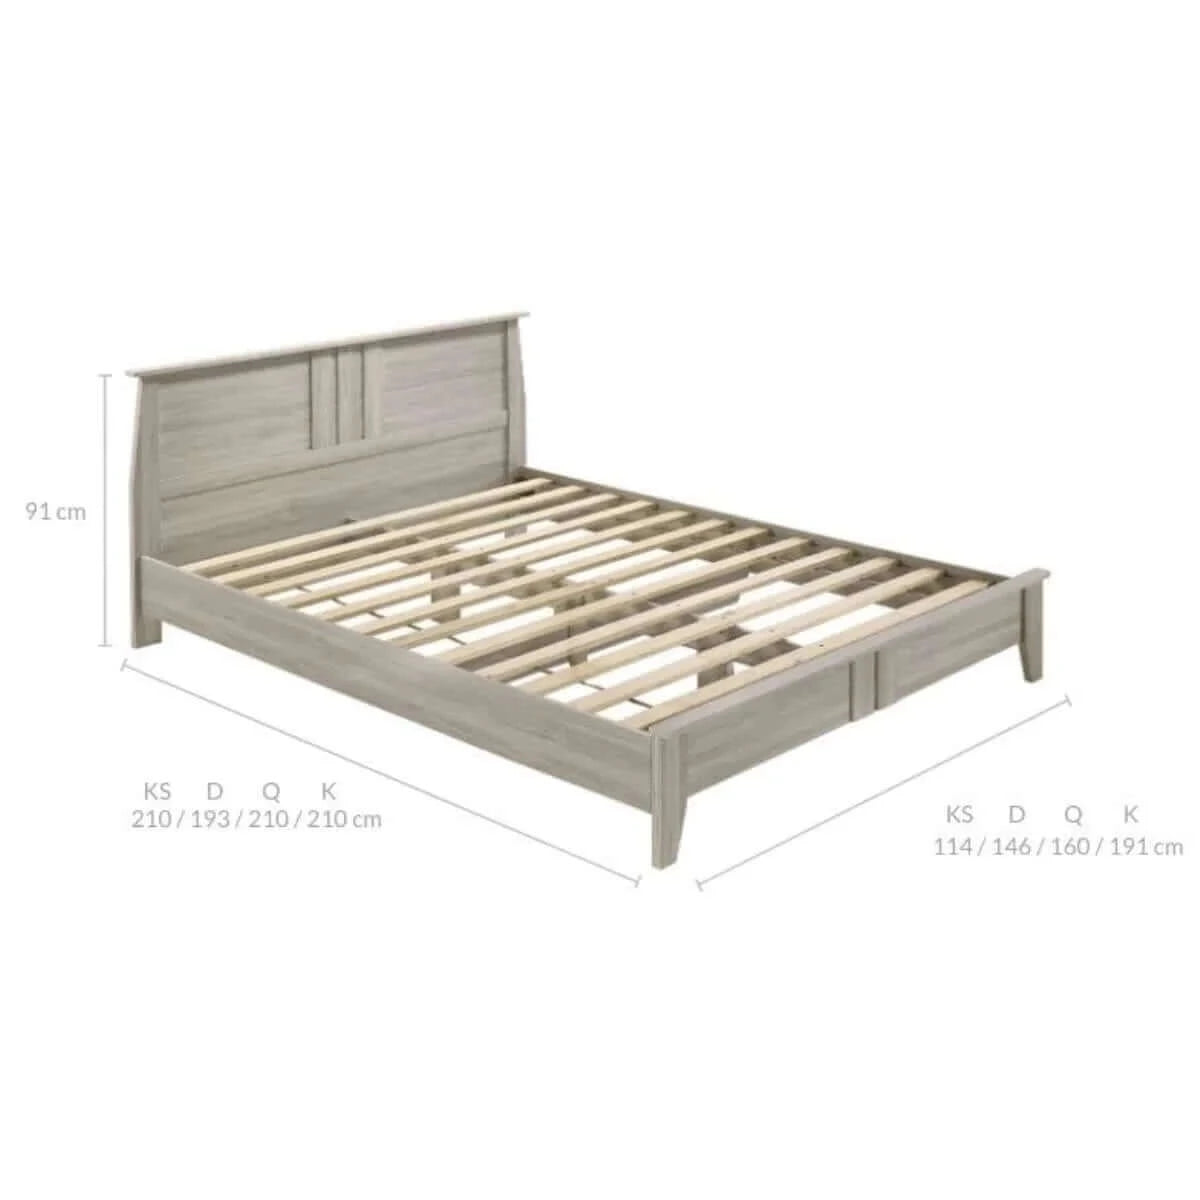 Buy king wooden bed frame base - upinteriors-Upinteriors